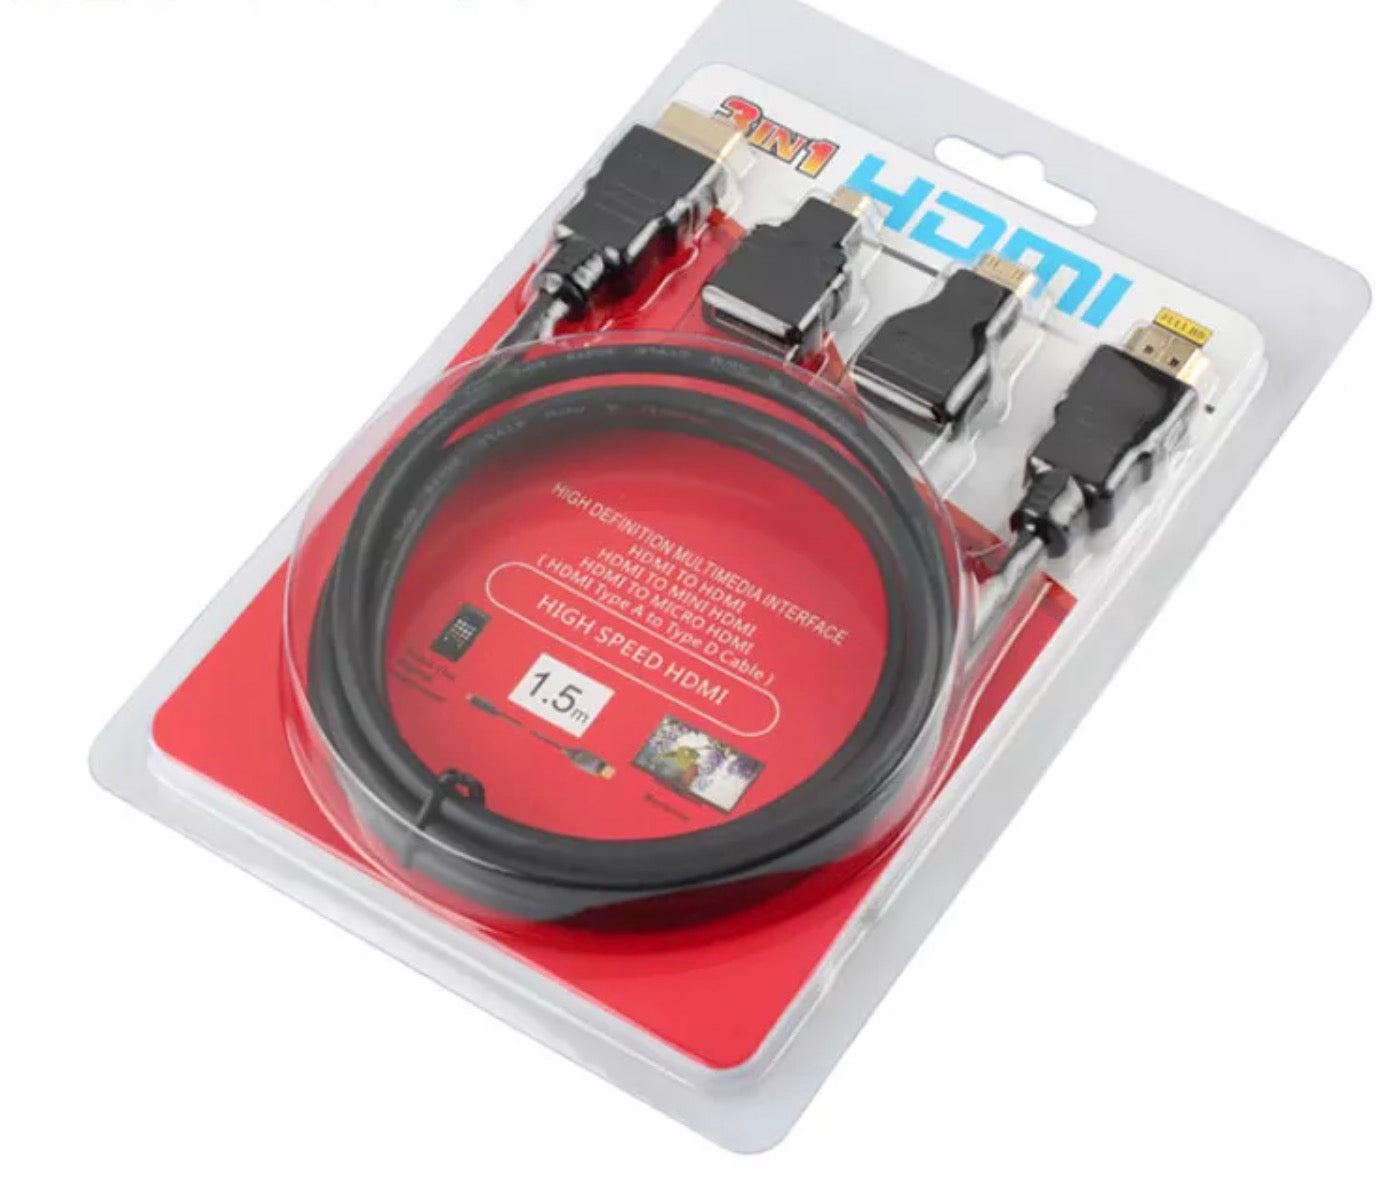 3 in 1 HDMI Cable Kit Including HDMI Mini + HDMI Micro Adapters